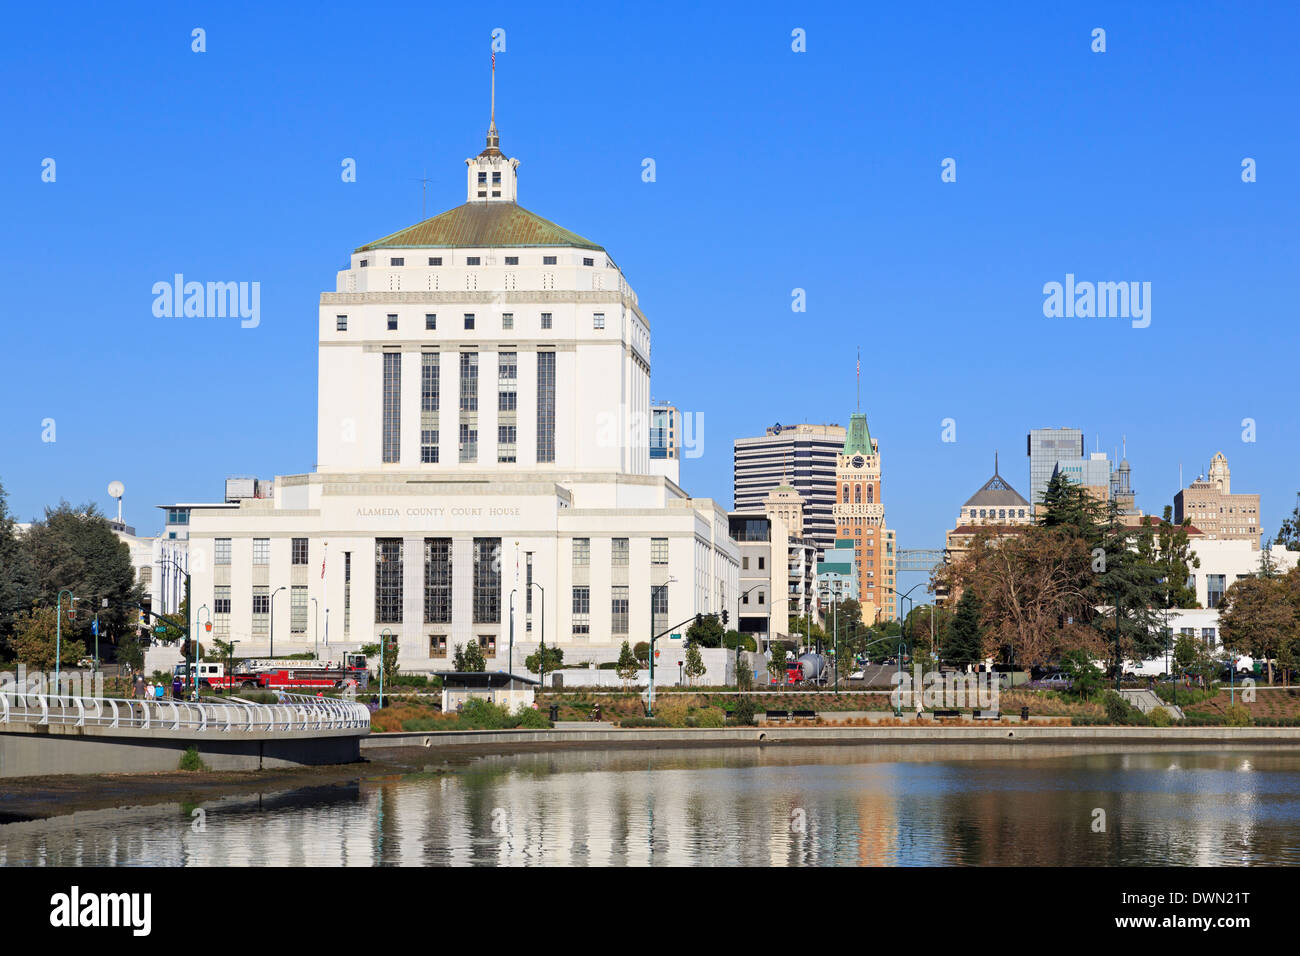 Alameda County Court House and Lake Merritt, Oakland, California, United States of America, North America Stock Photo